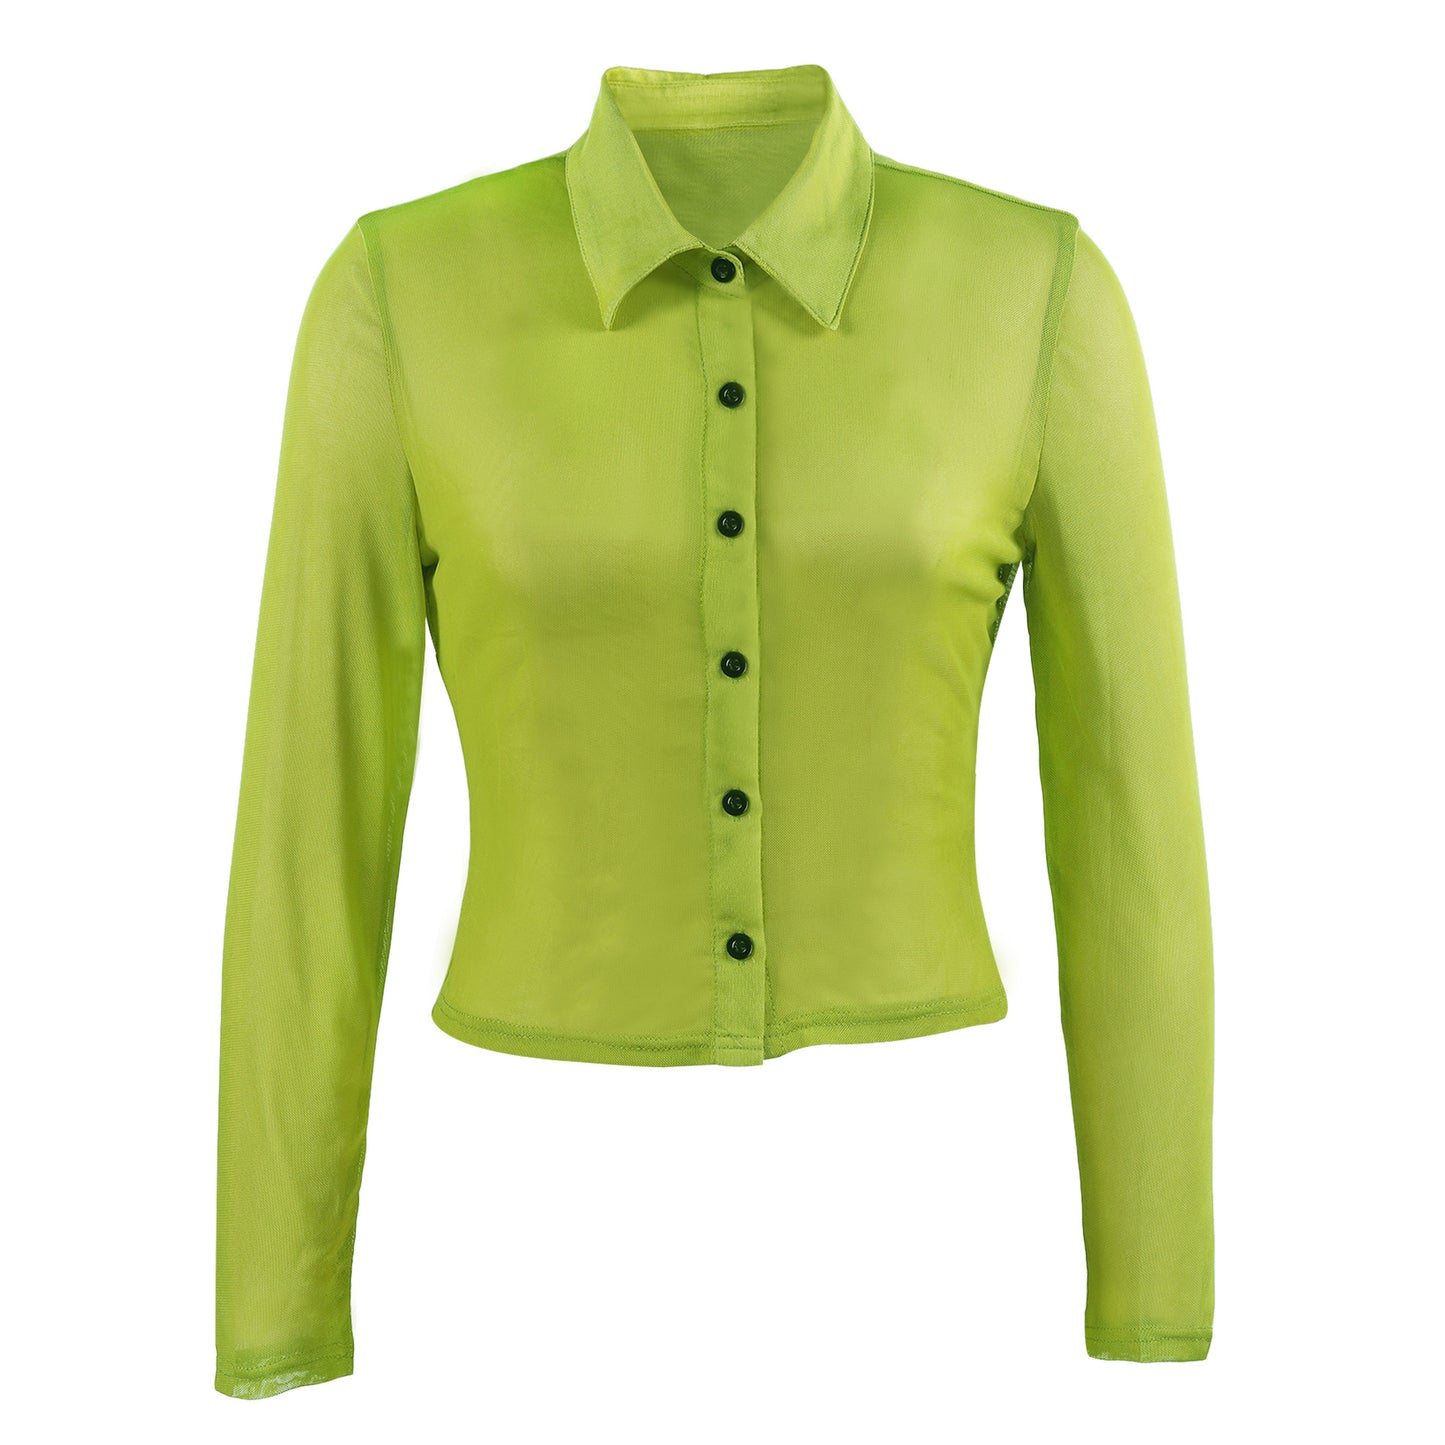 Fashion Women Sexy Shirt Tops-Shirts & Tops-Green-S-Free Shipping at meselling99